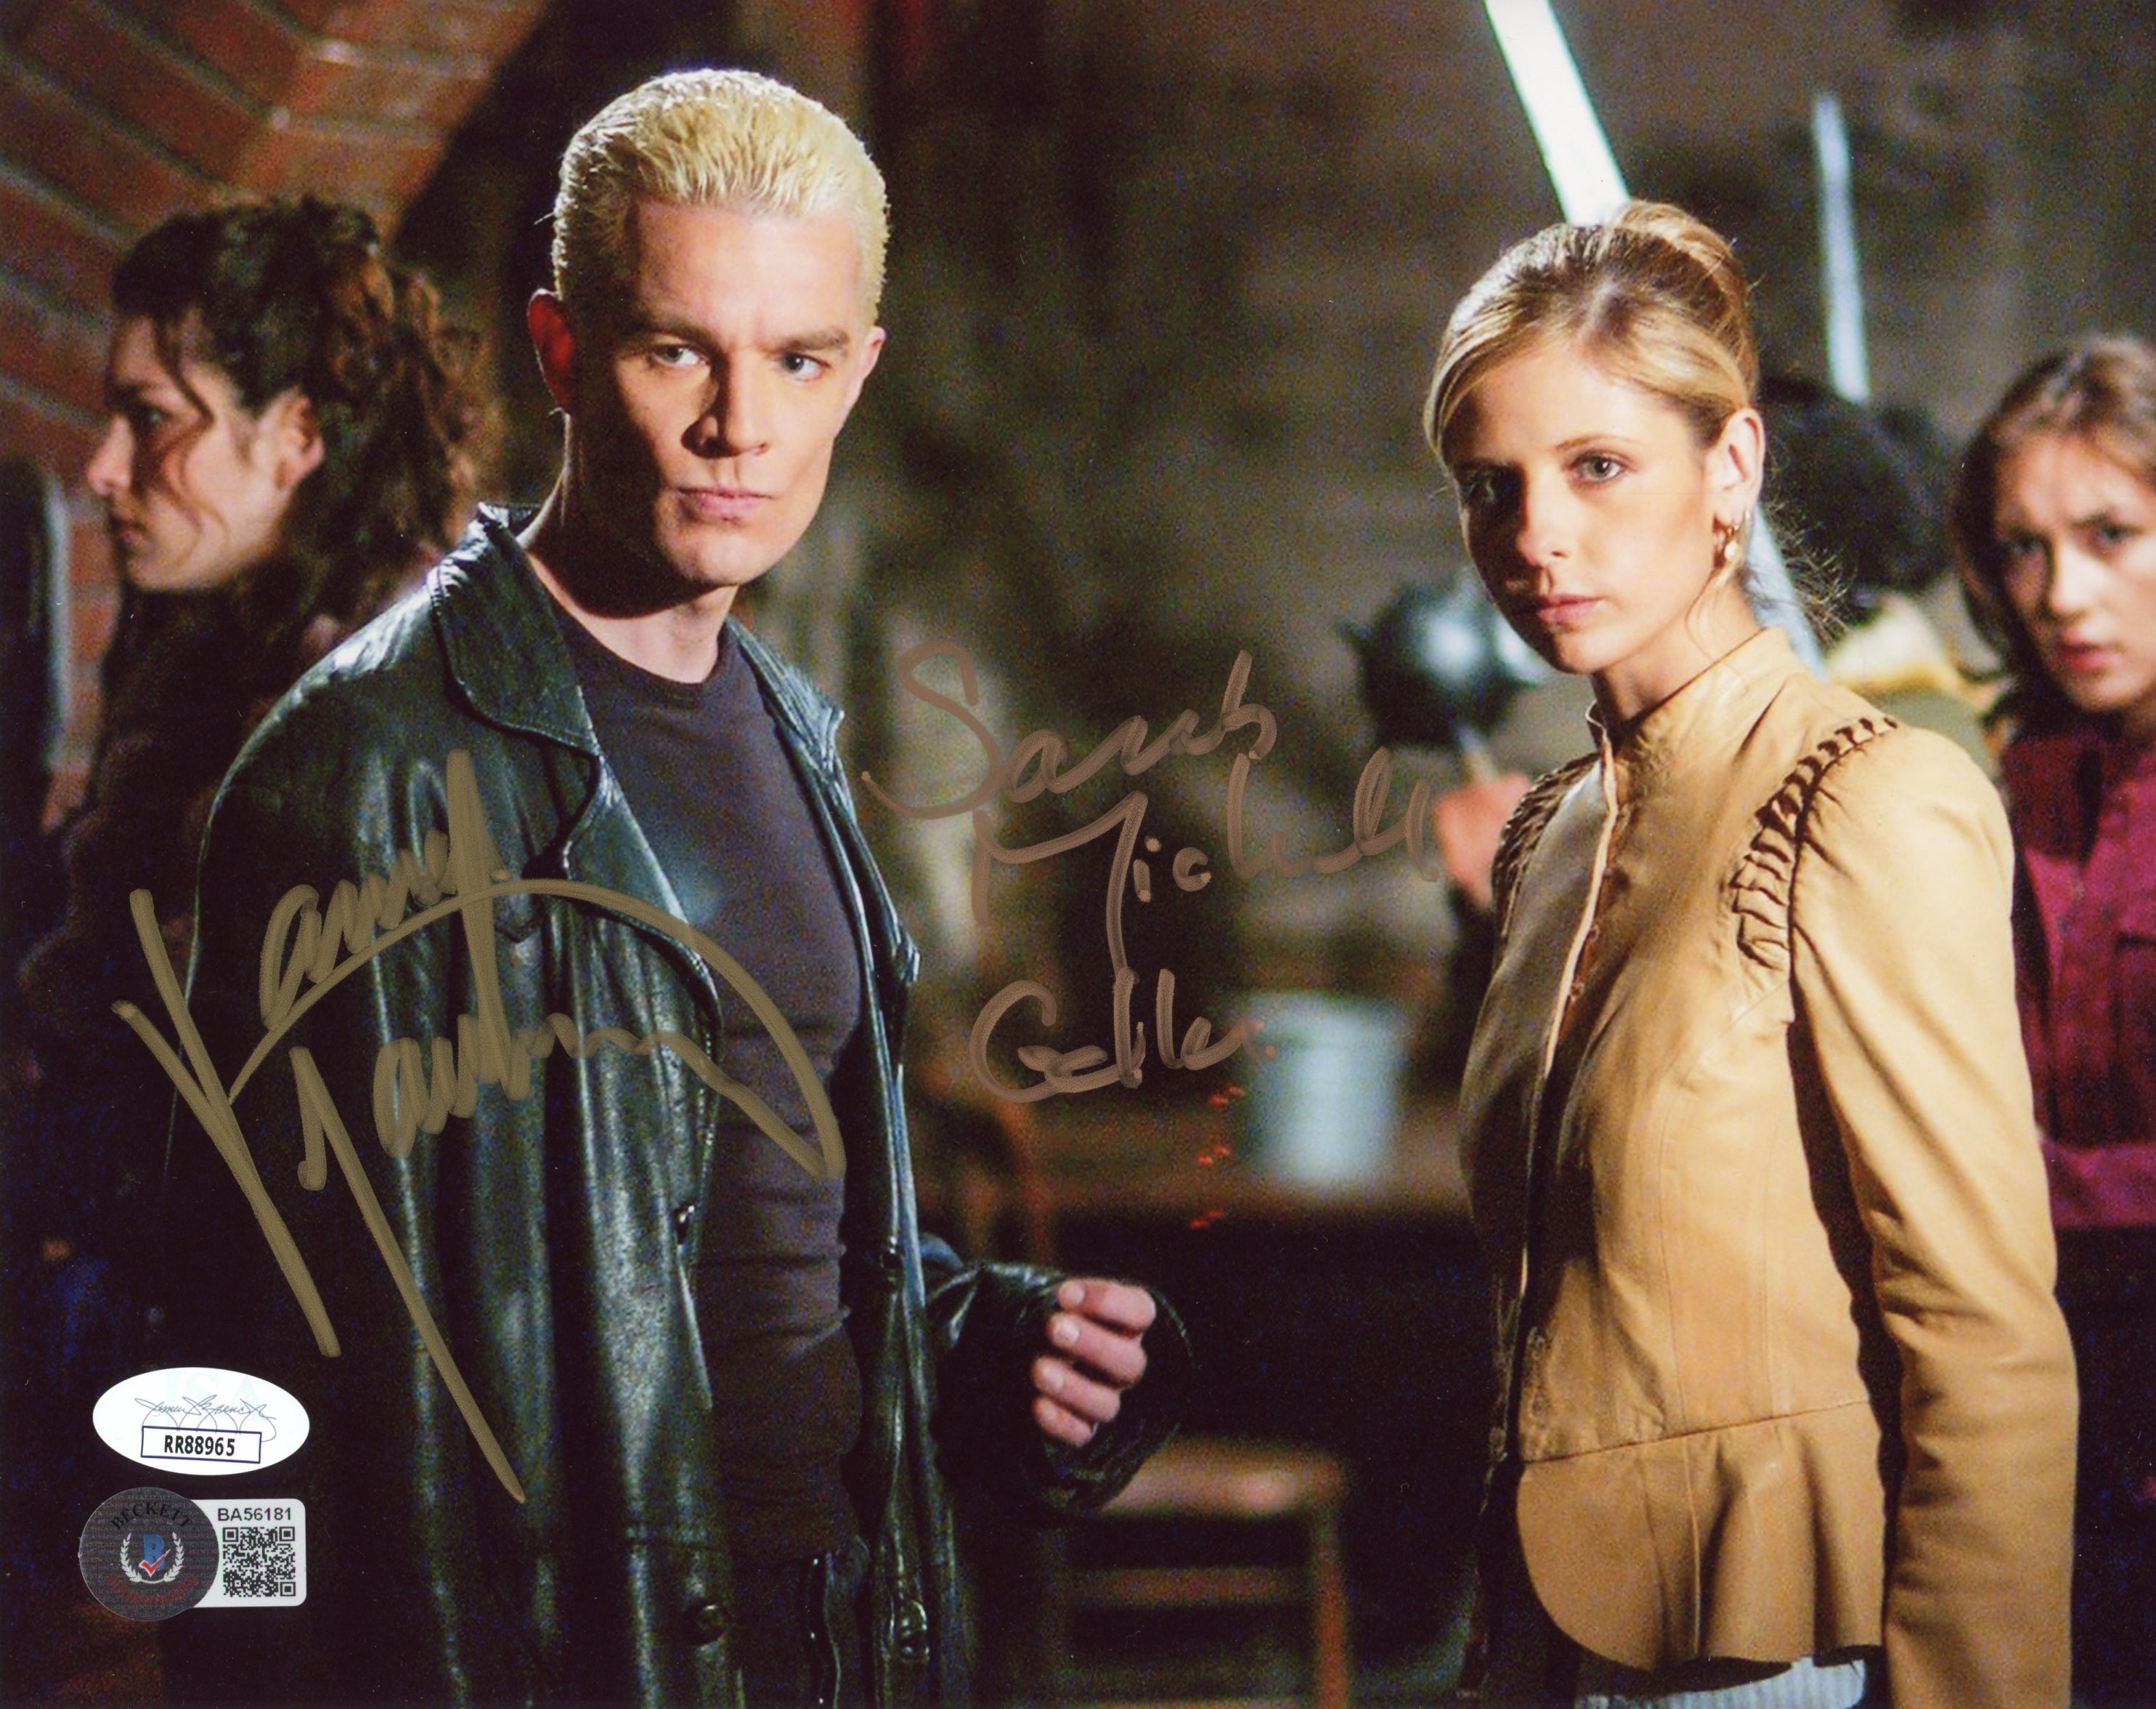 Buffy the Vampire Slayer 8x10 Signed Photo Gellar Marsters Beckett JSA Certified Autograph